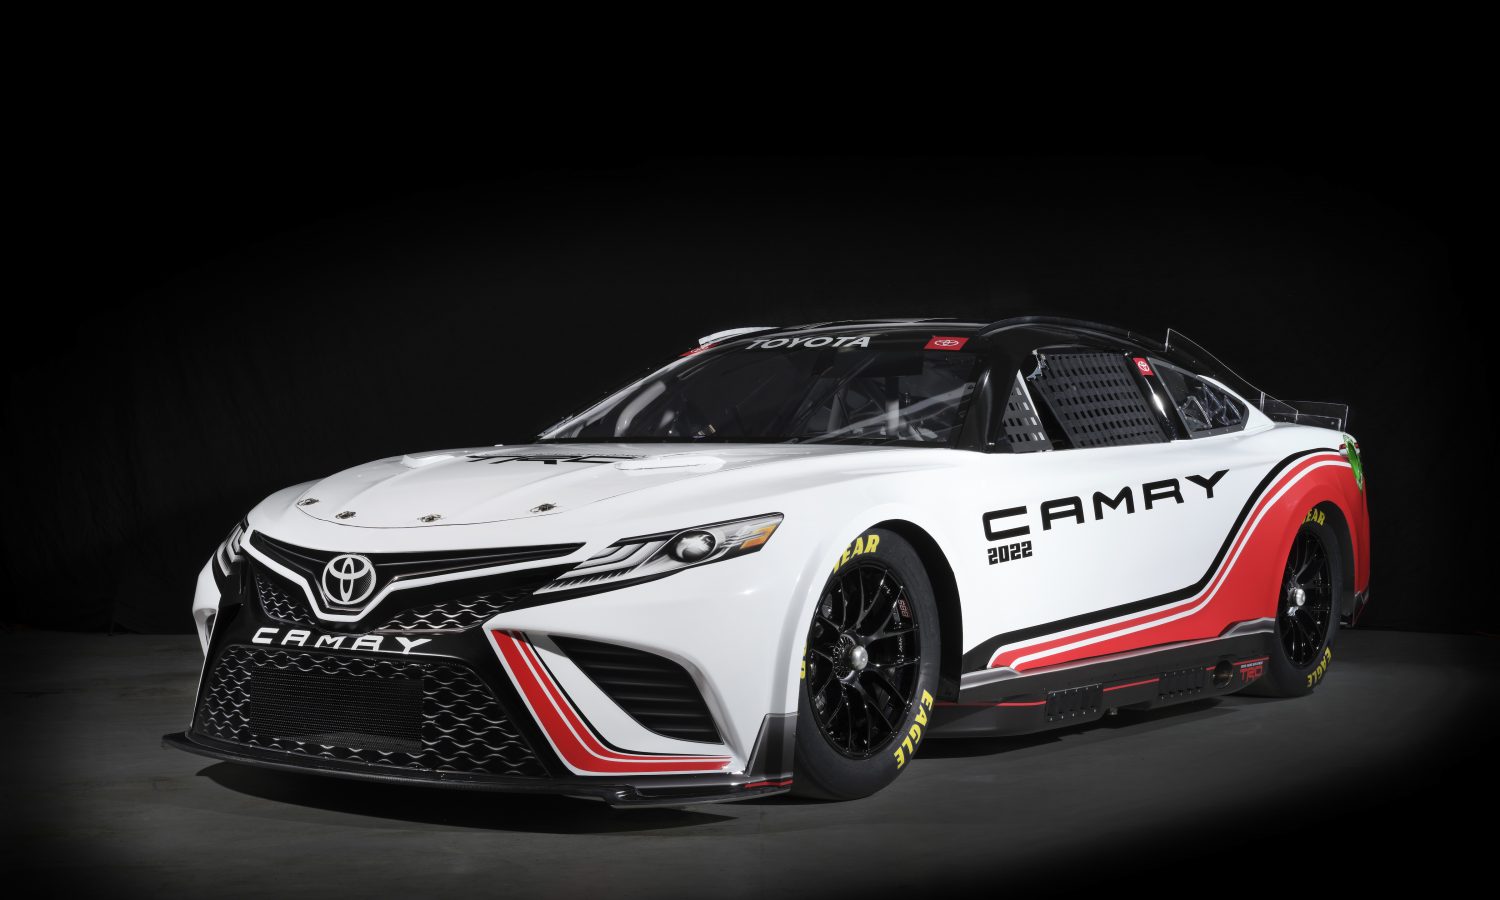 Toyota Reveals TRD Camry For 2022 NASCAR Cup Series - Toyota USA Newsroom